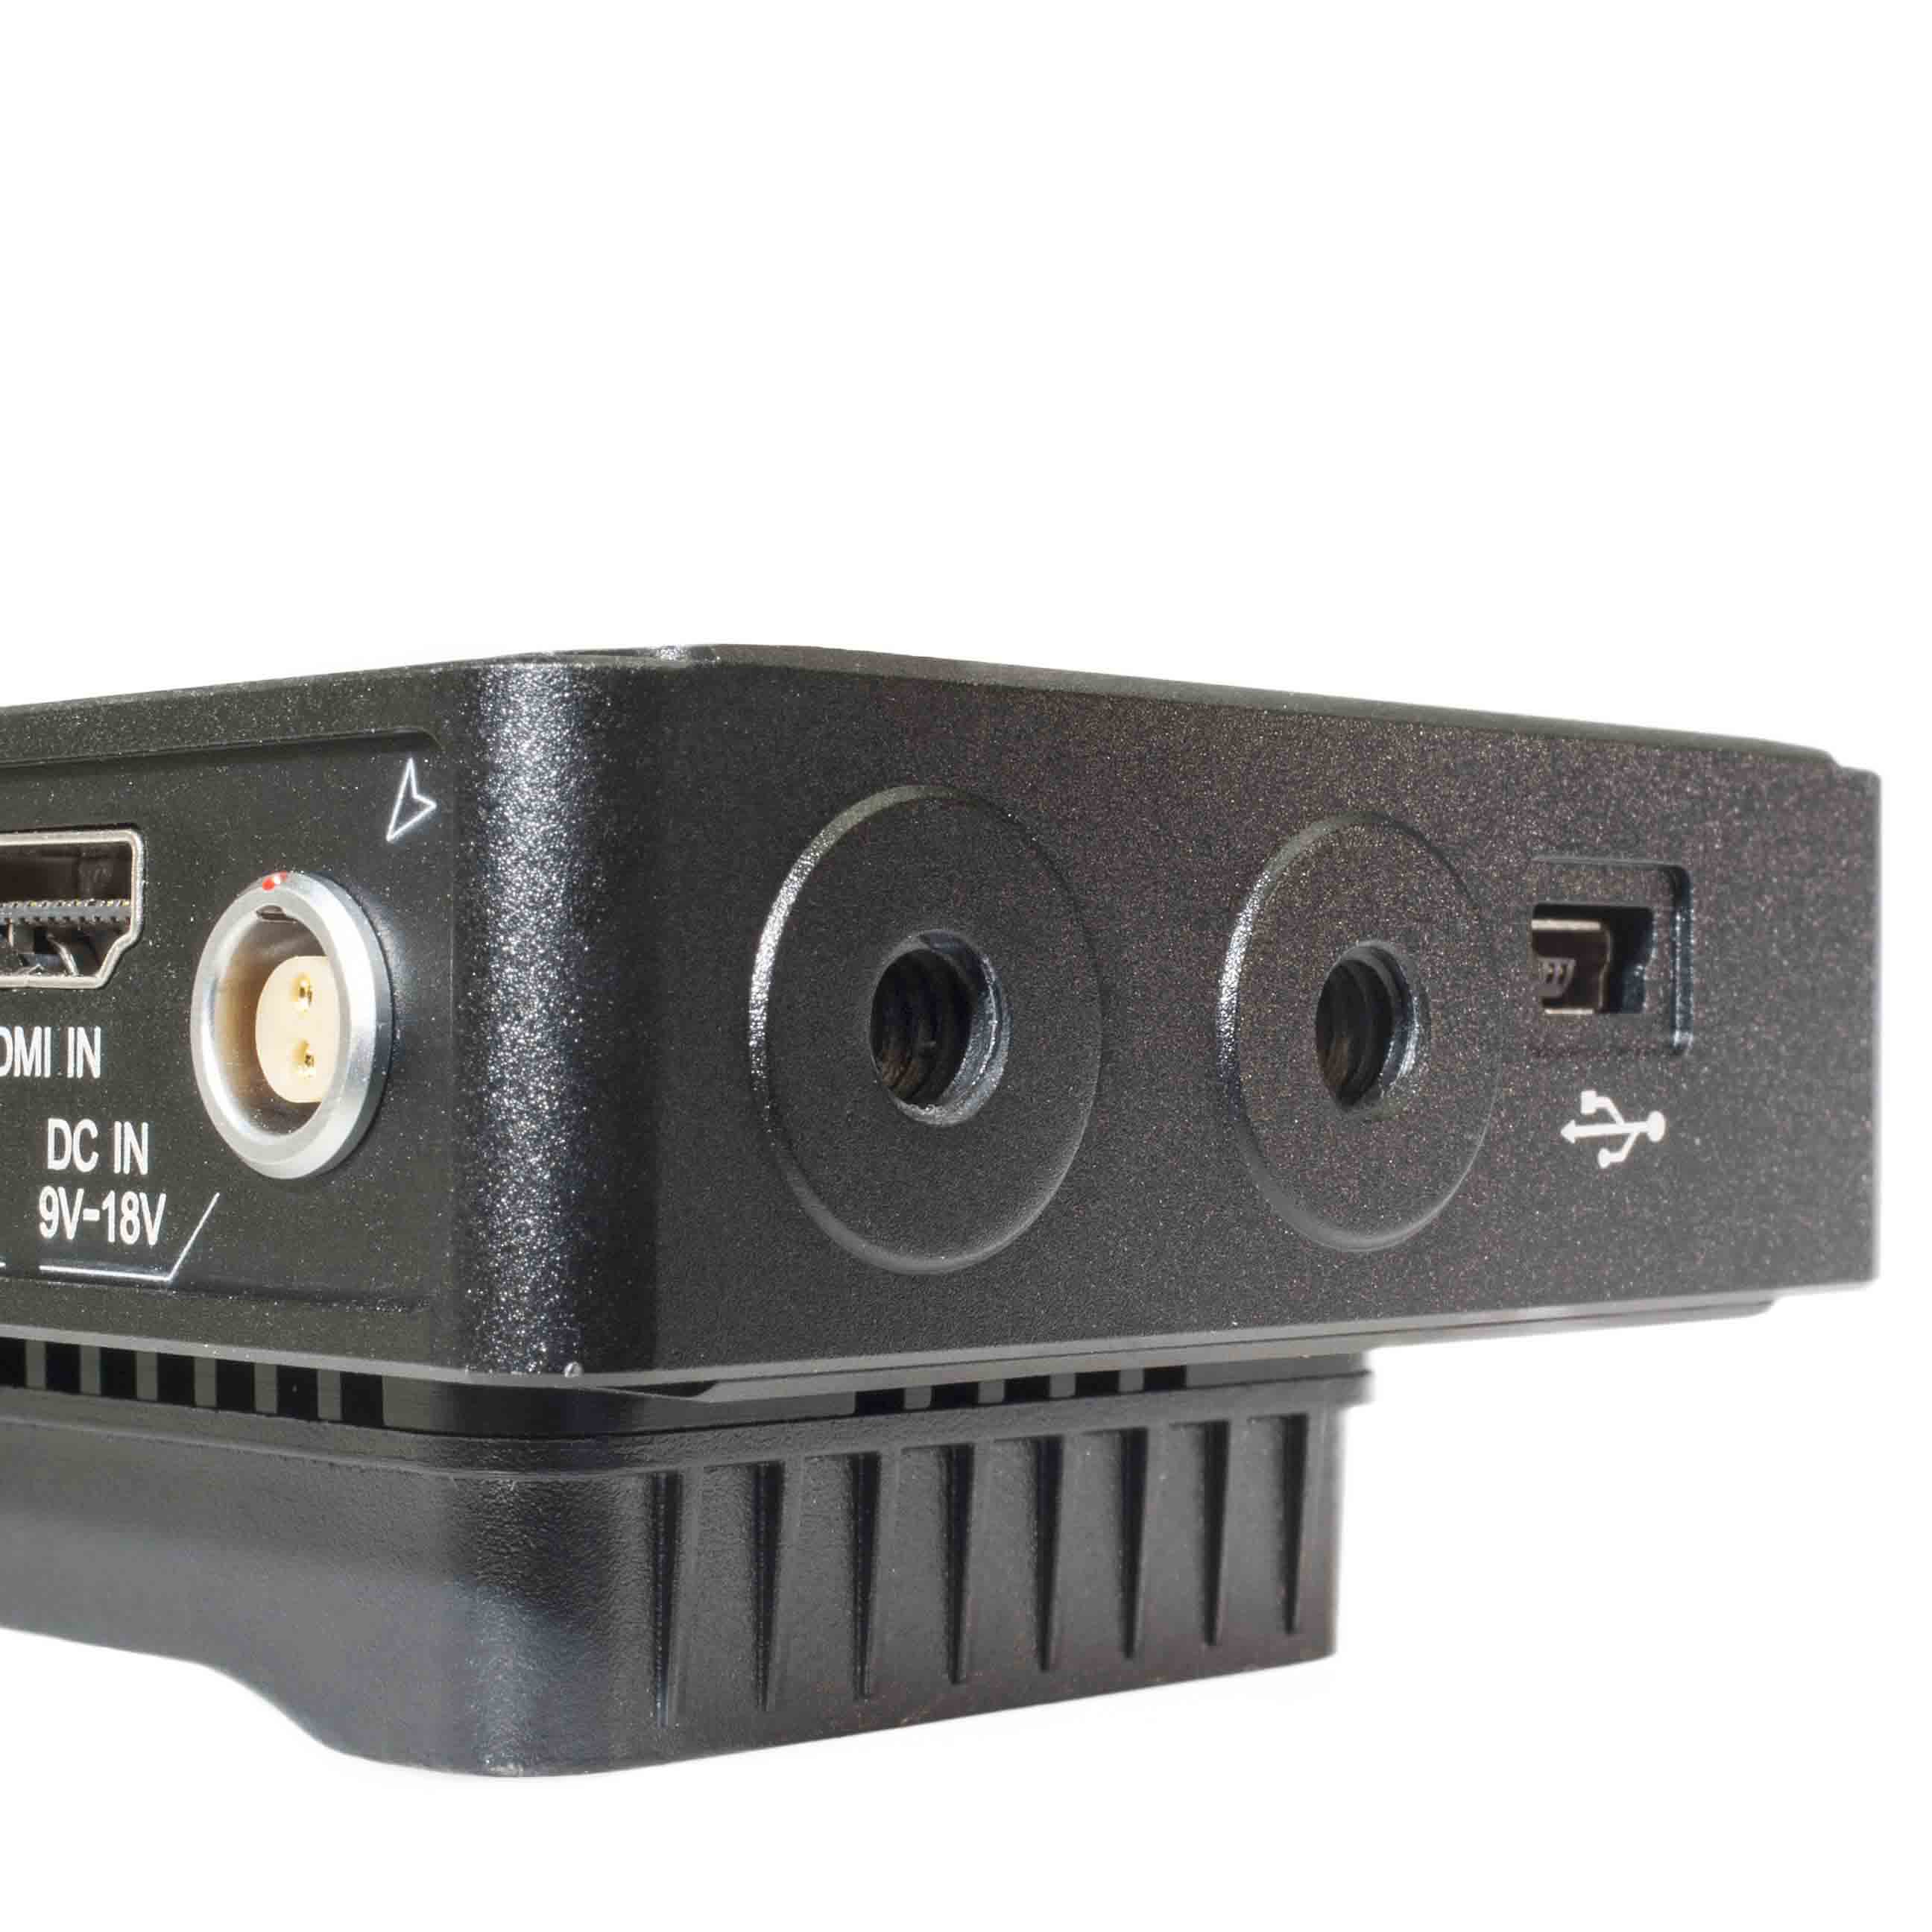 Ghost-Eye 600M Wireless HDMI and SDI Video Transmission Dual Receiver Kit